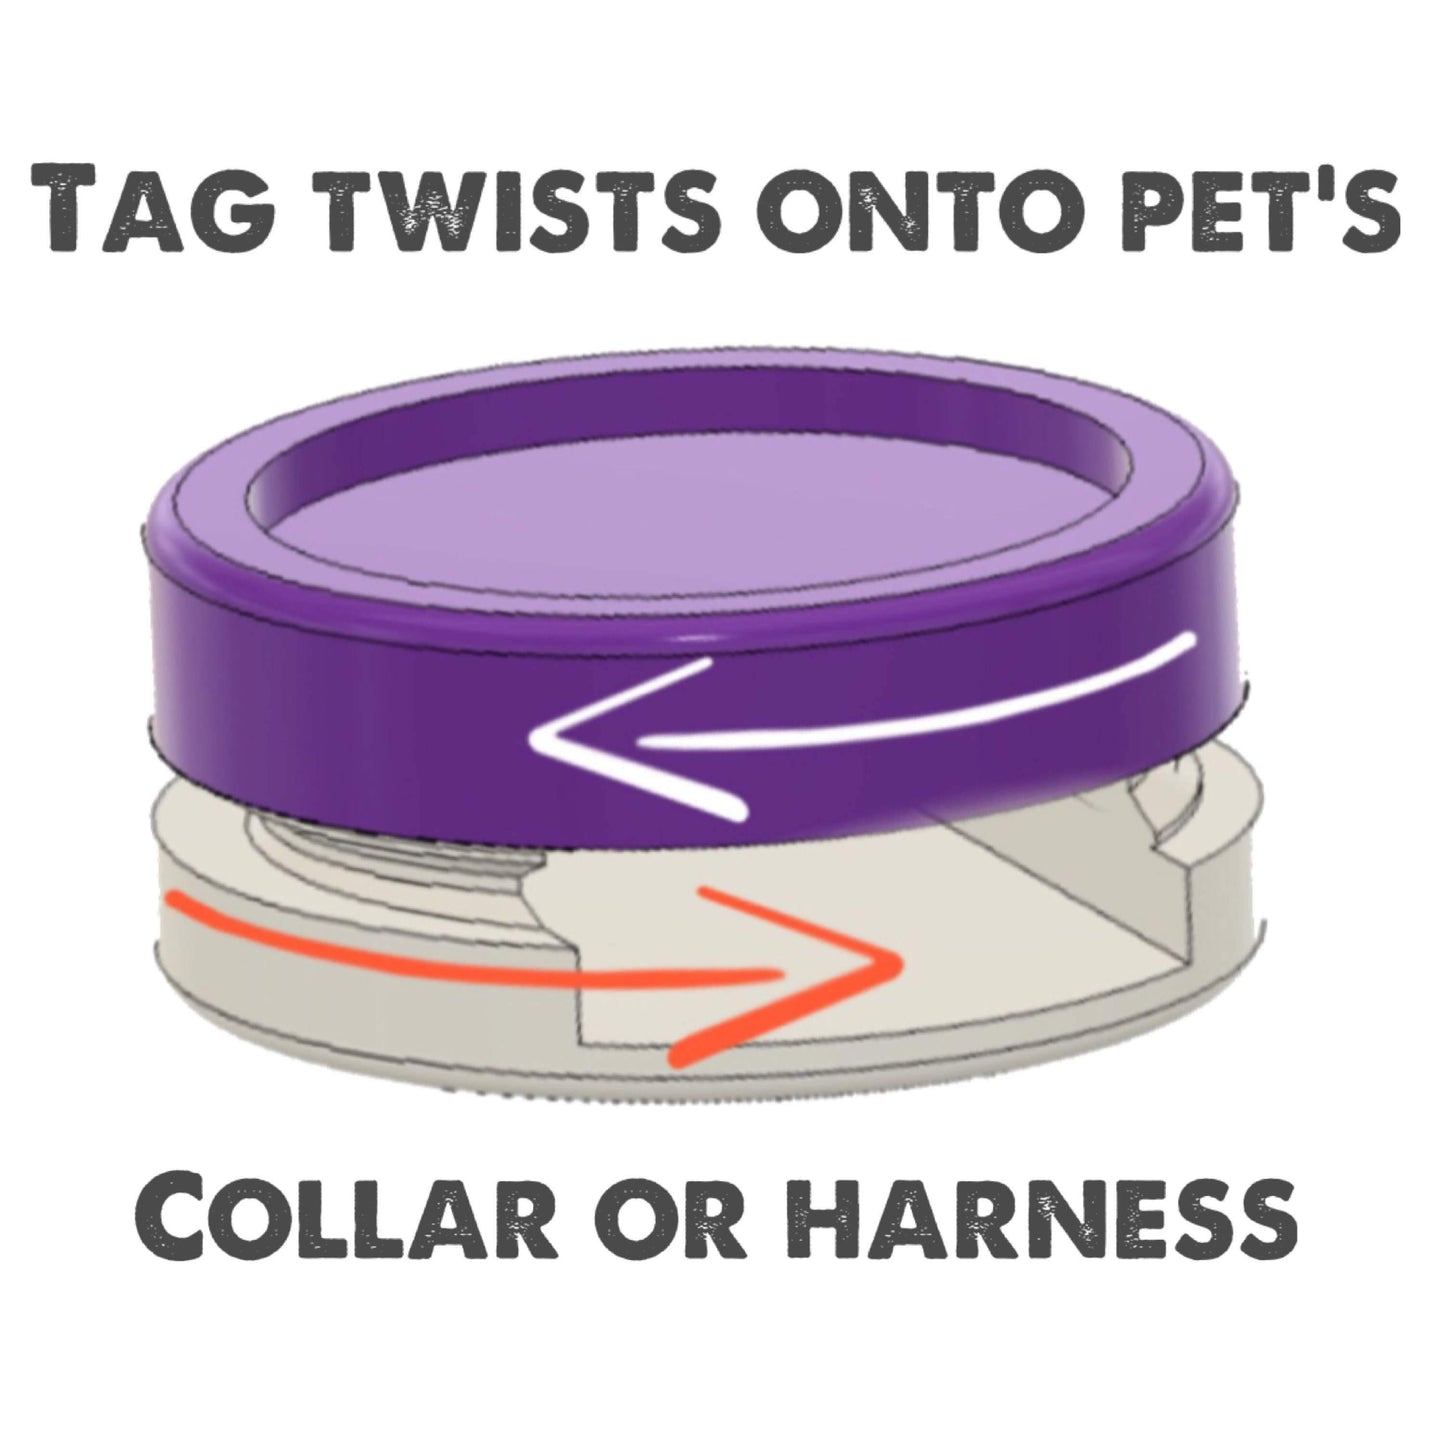 Funny Customizable Twist-On Pet Tag